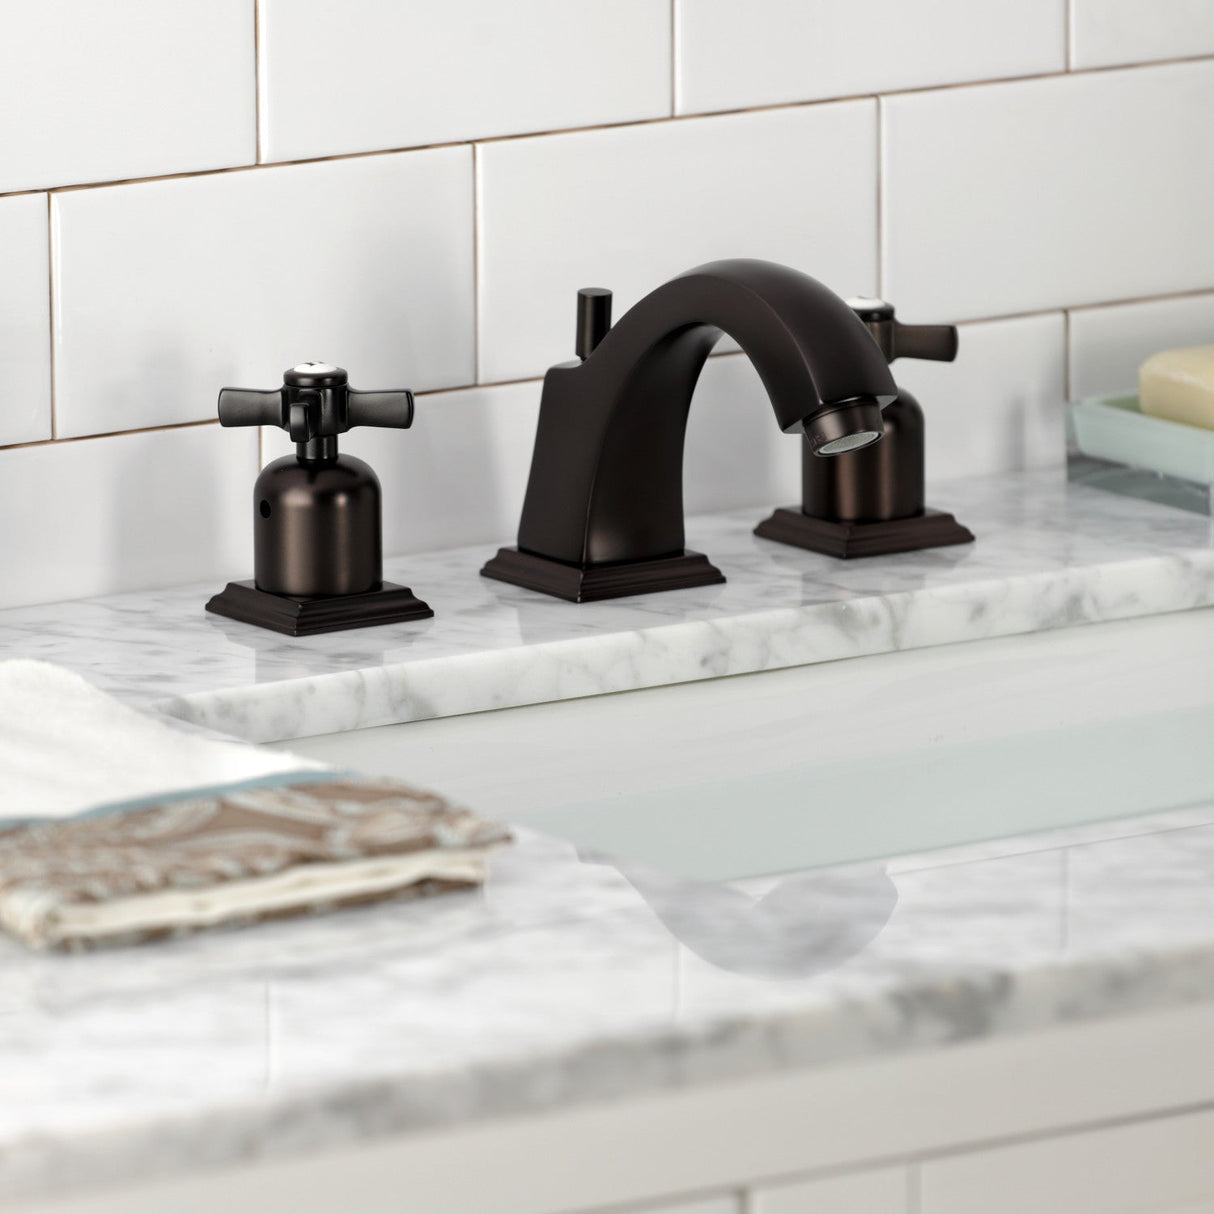 Millennium FSC4685ZX Two-Handle 3-Hole Deck Mount Widespread Bathroom Faucet with Pop-Up Drain, Oil Rubbed Bronze